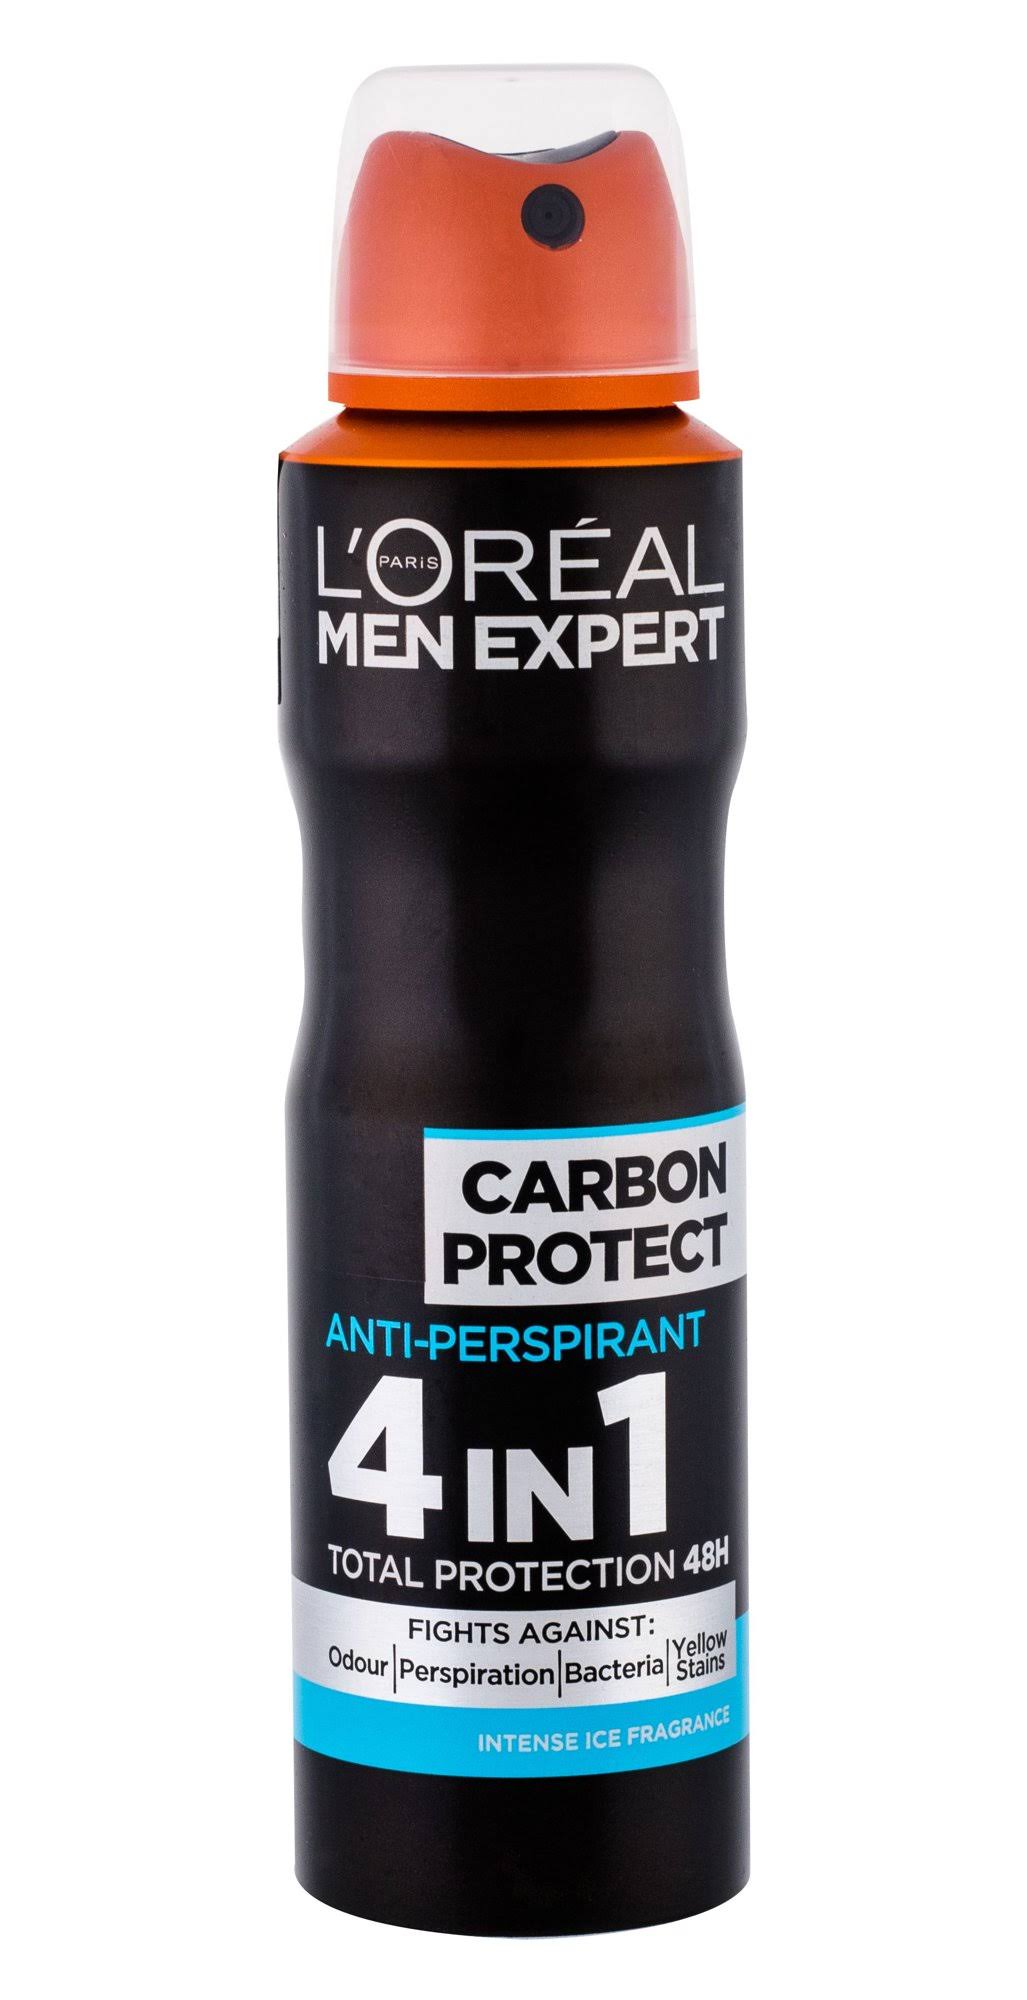 L'Oreal Paris Men Expert Deodorant Spray - Carbon Protect, 150ml